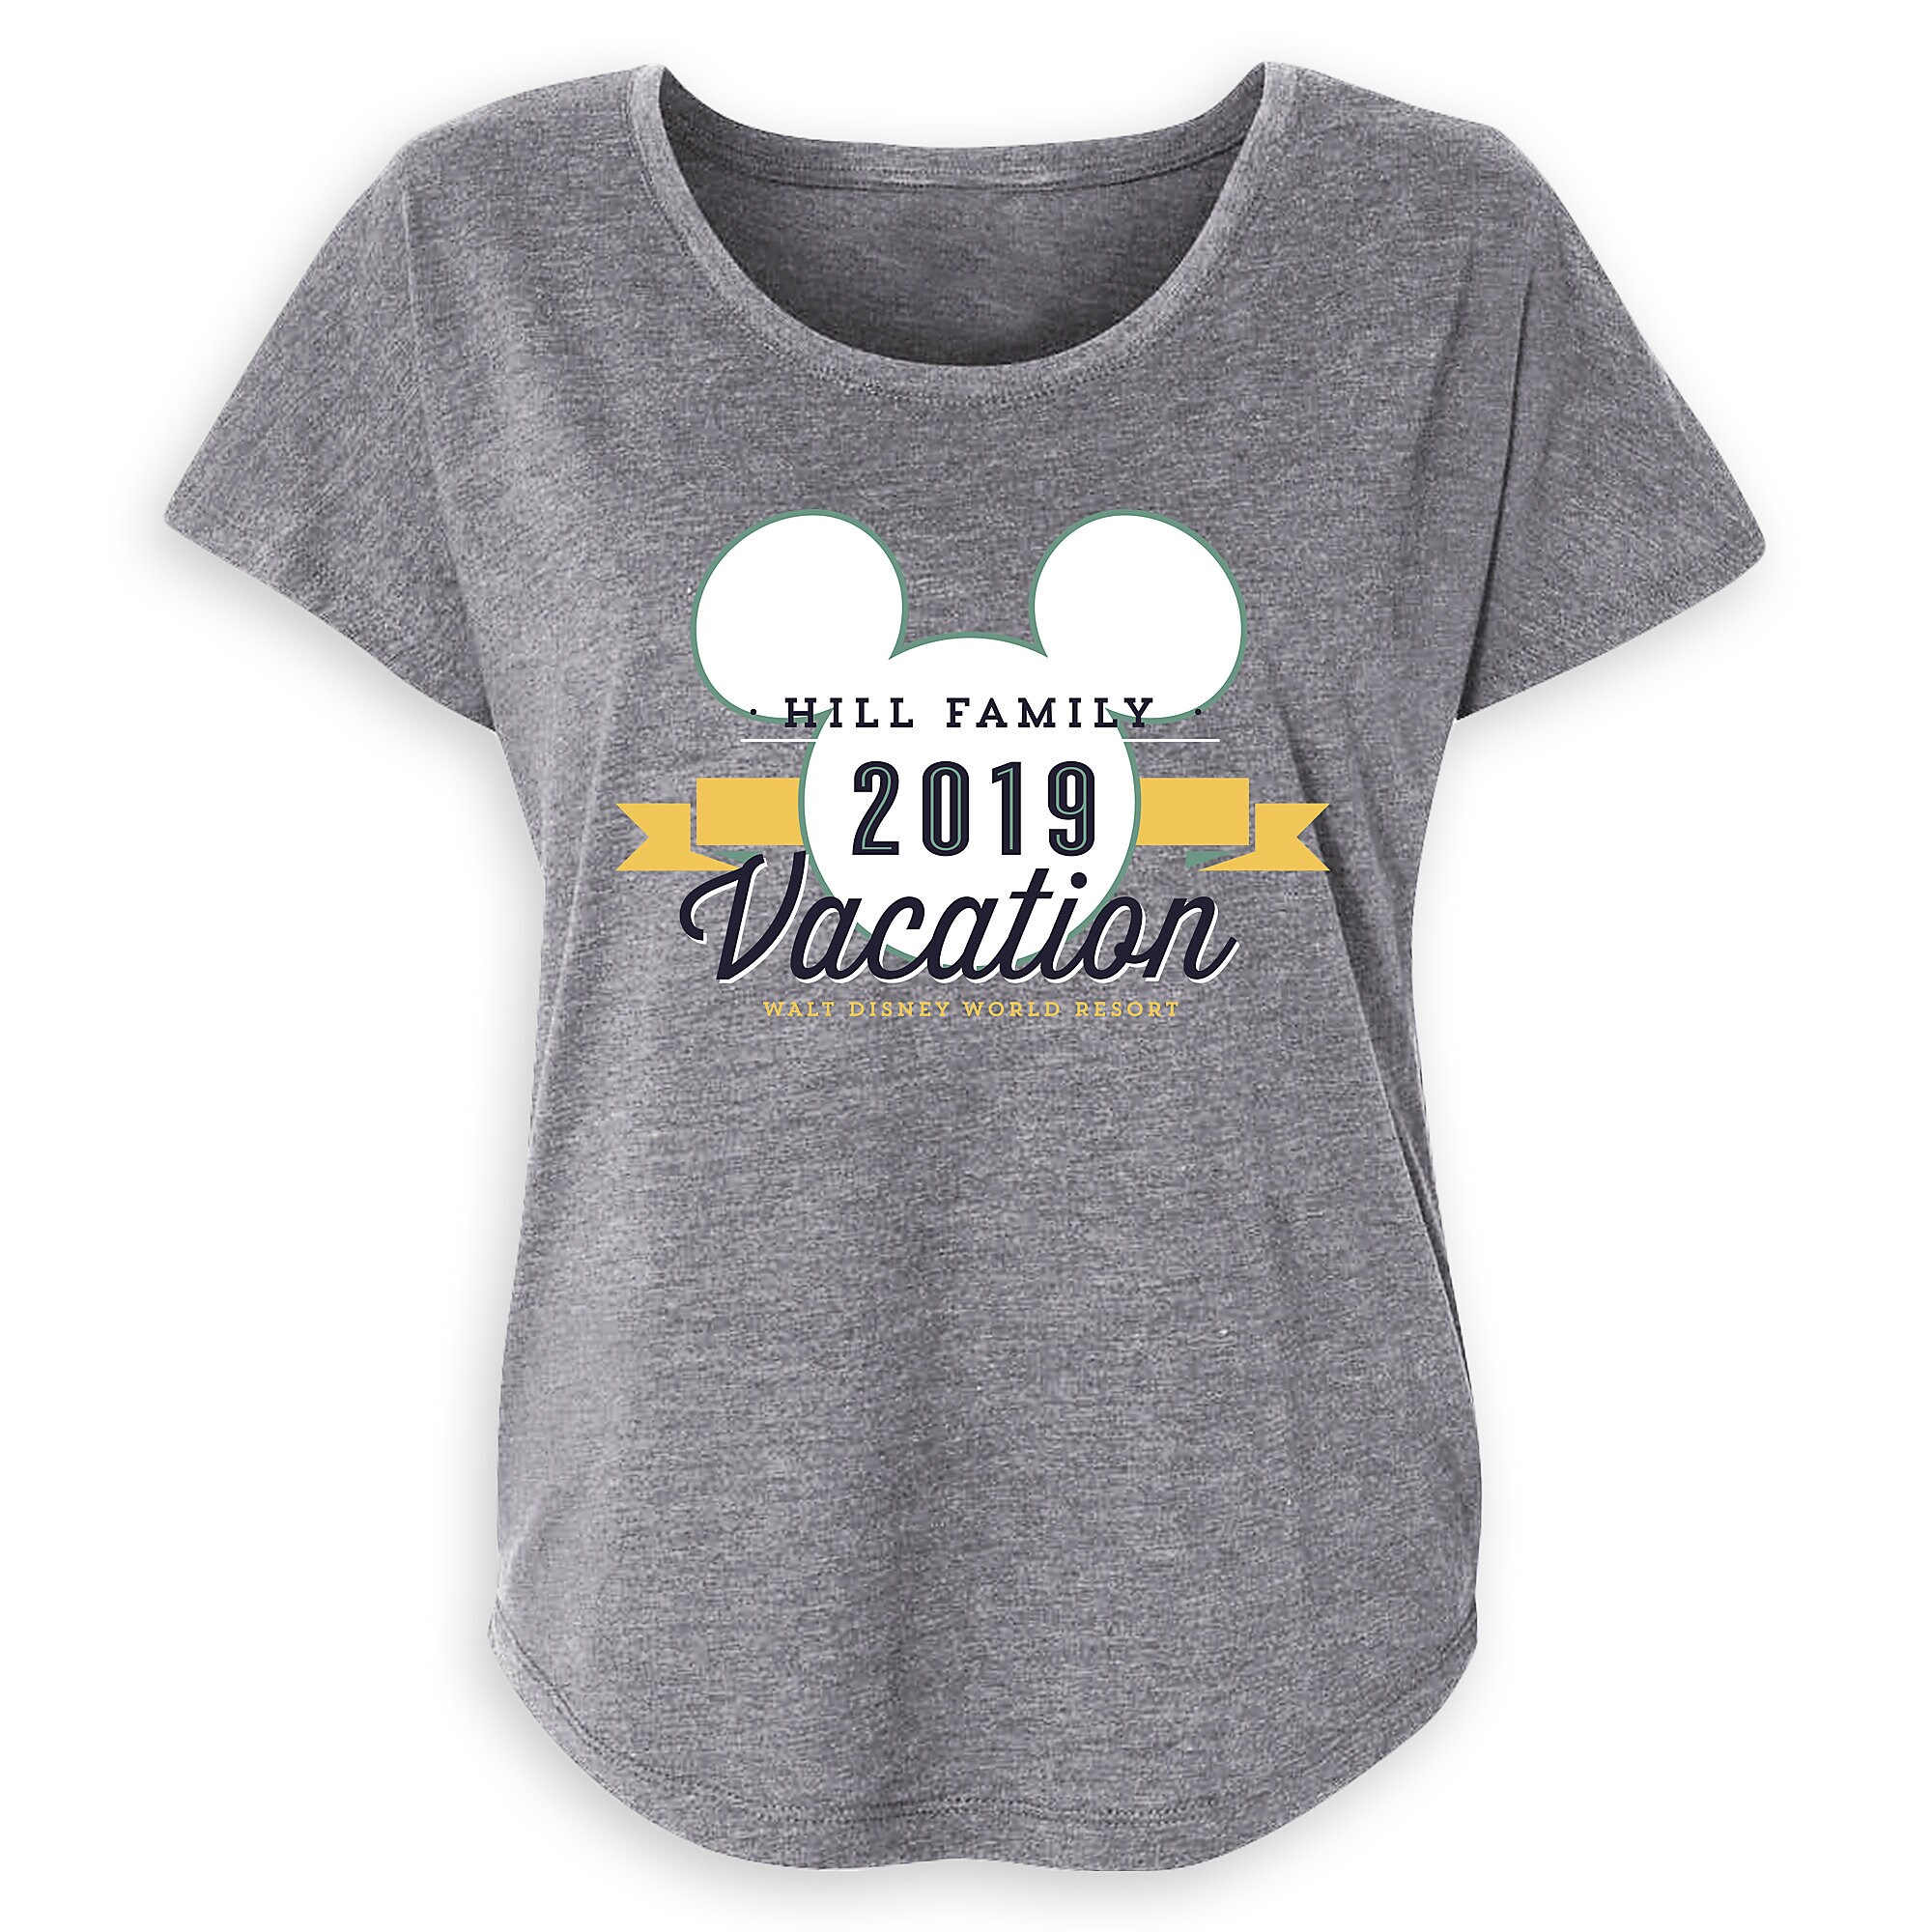 Women's Mickey Mouse Family Vacation T-Shirt - Walt Disney World Resort - 2019 - Customized